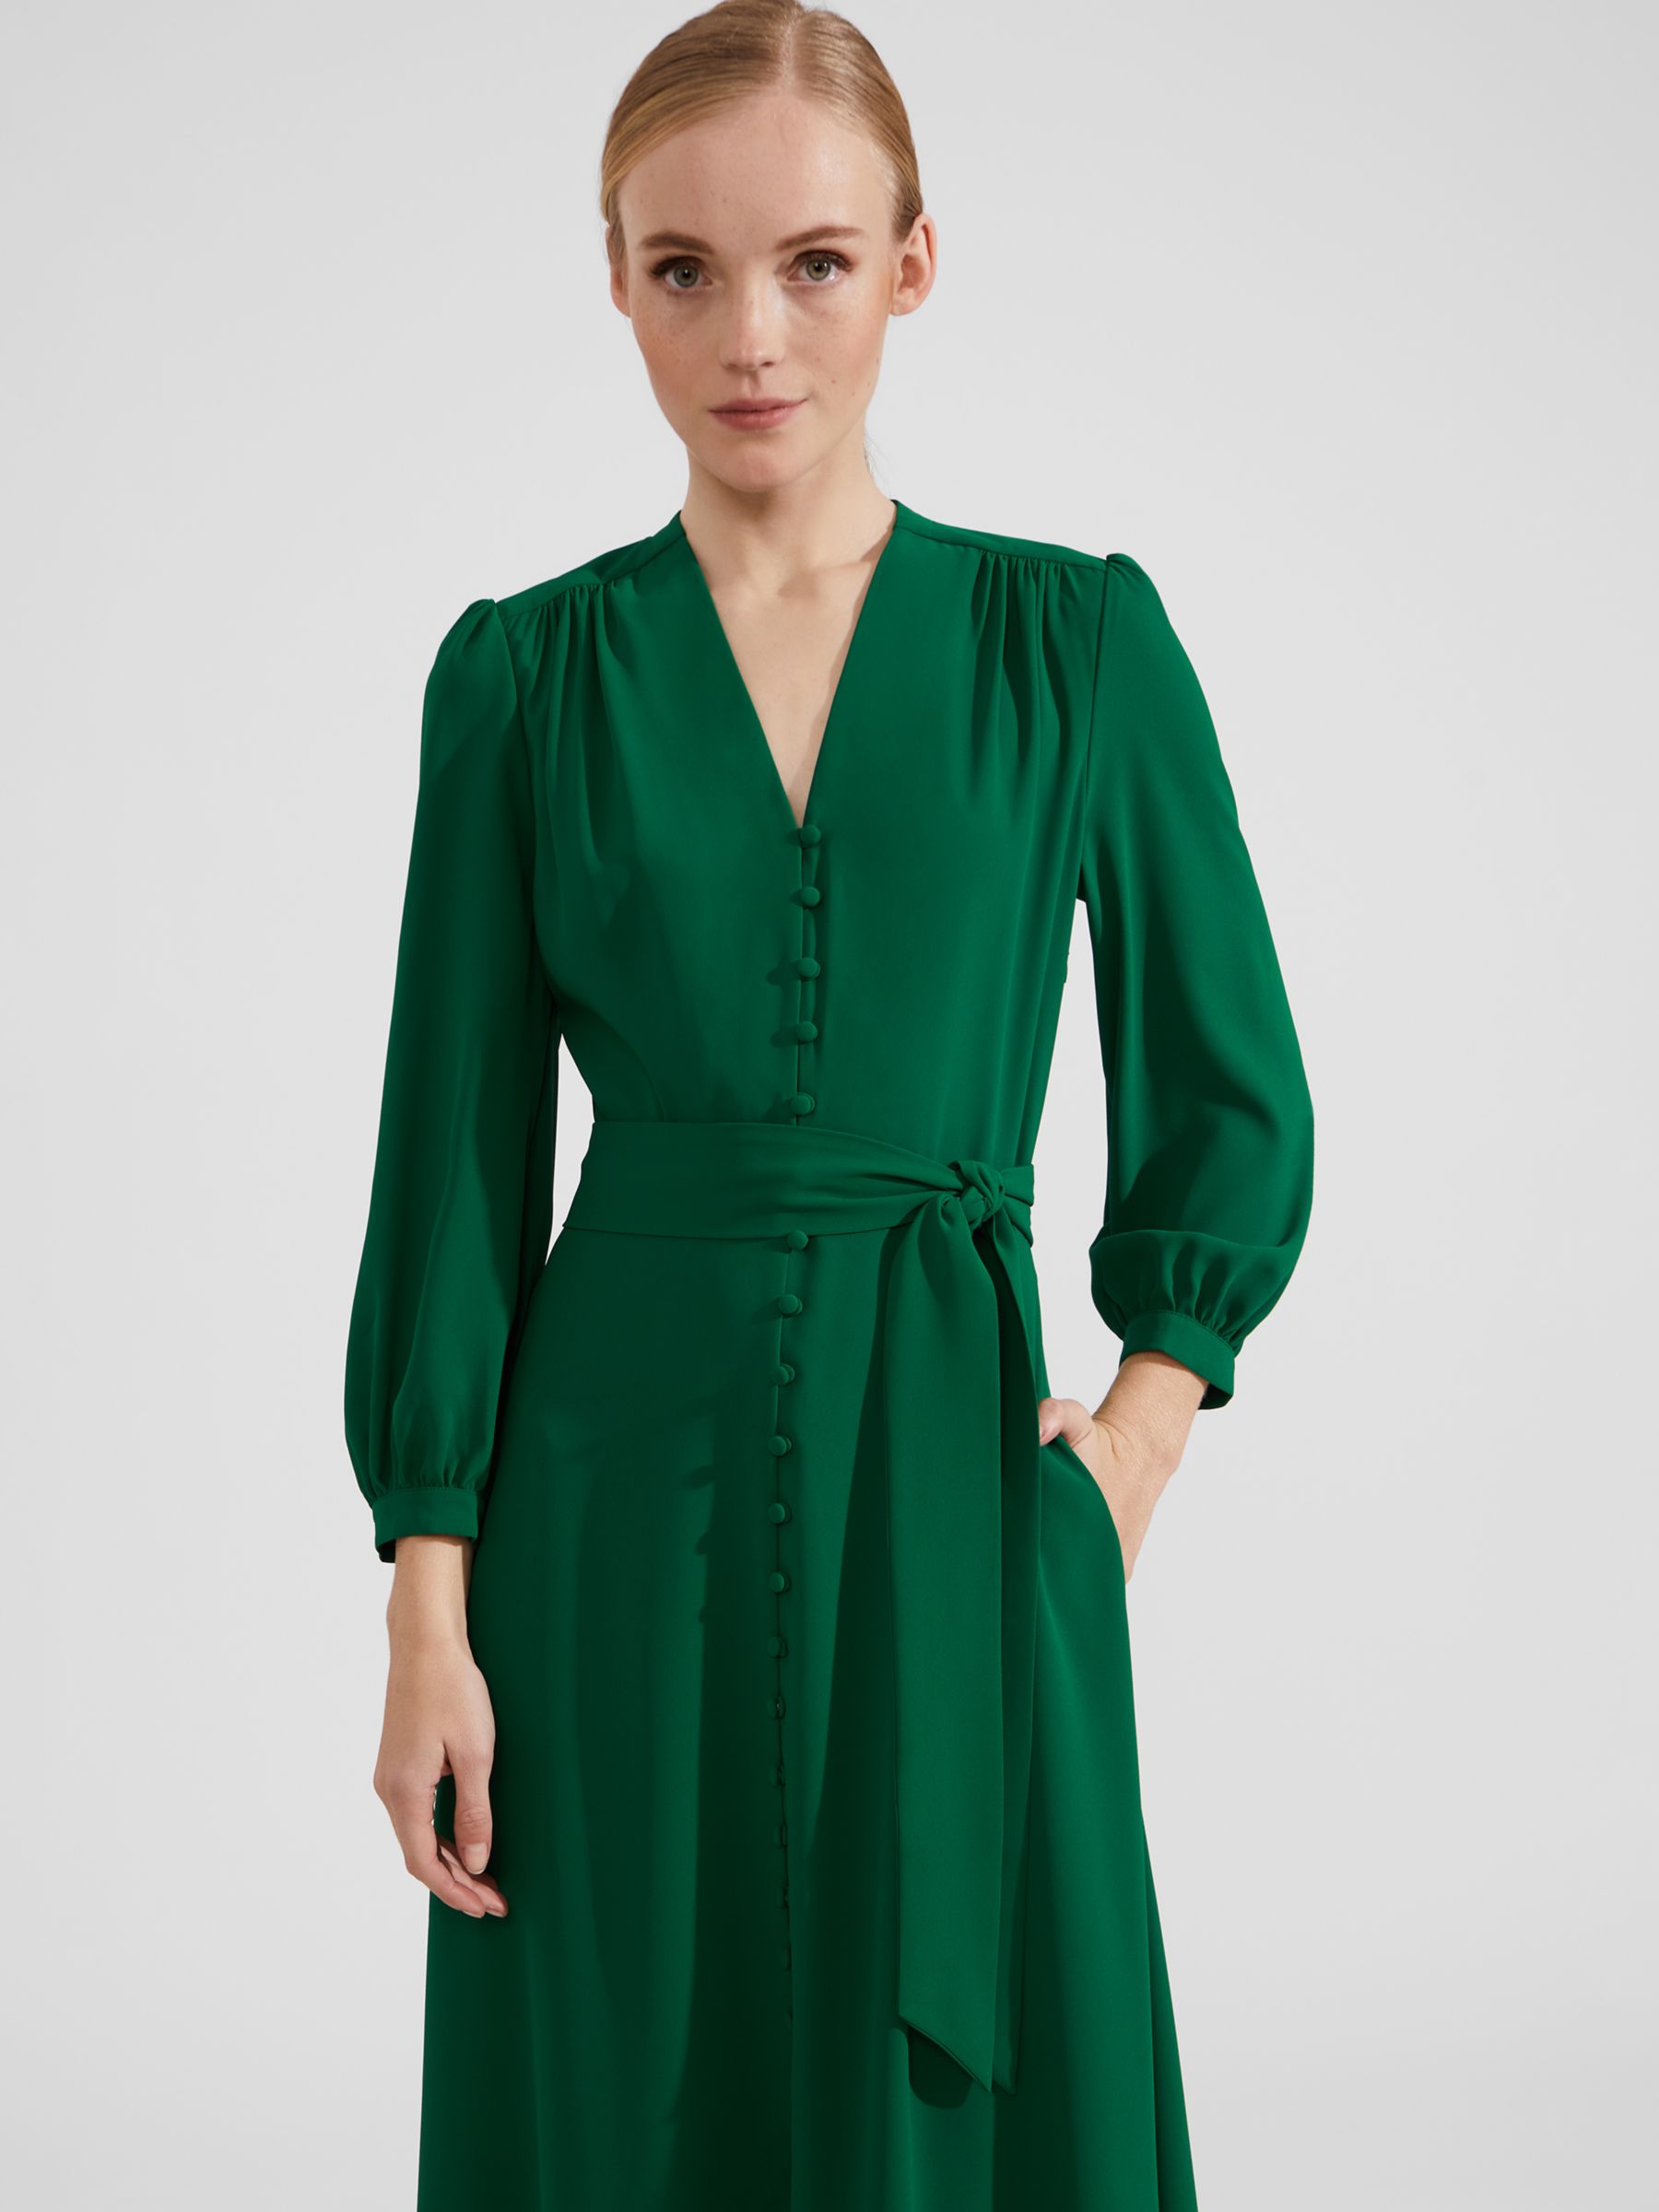 Hobbs Magnolia Belted Midi Dress, Green at John Lewis & Partners